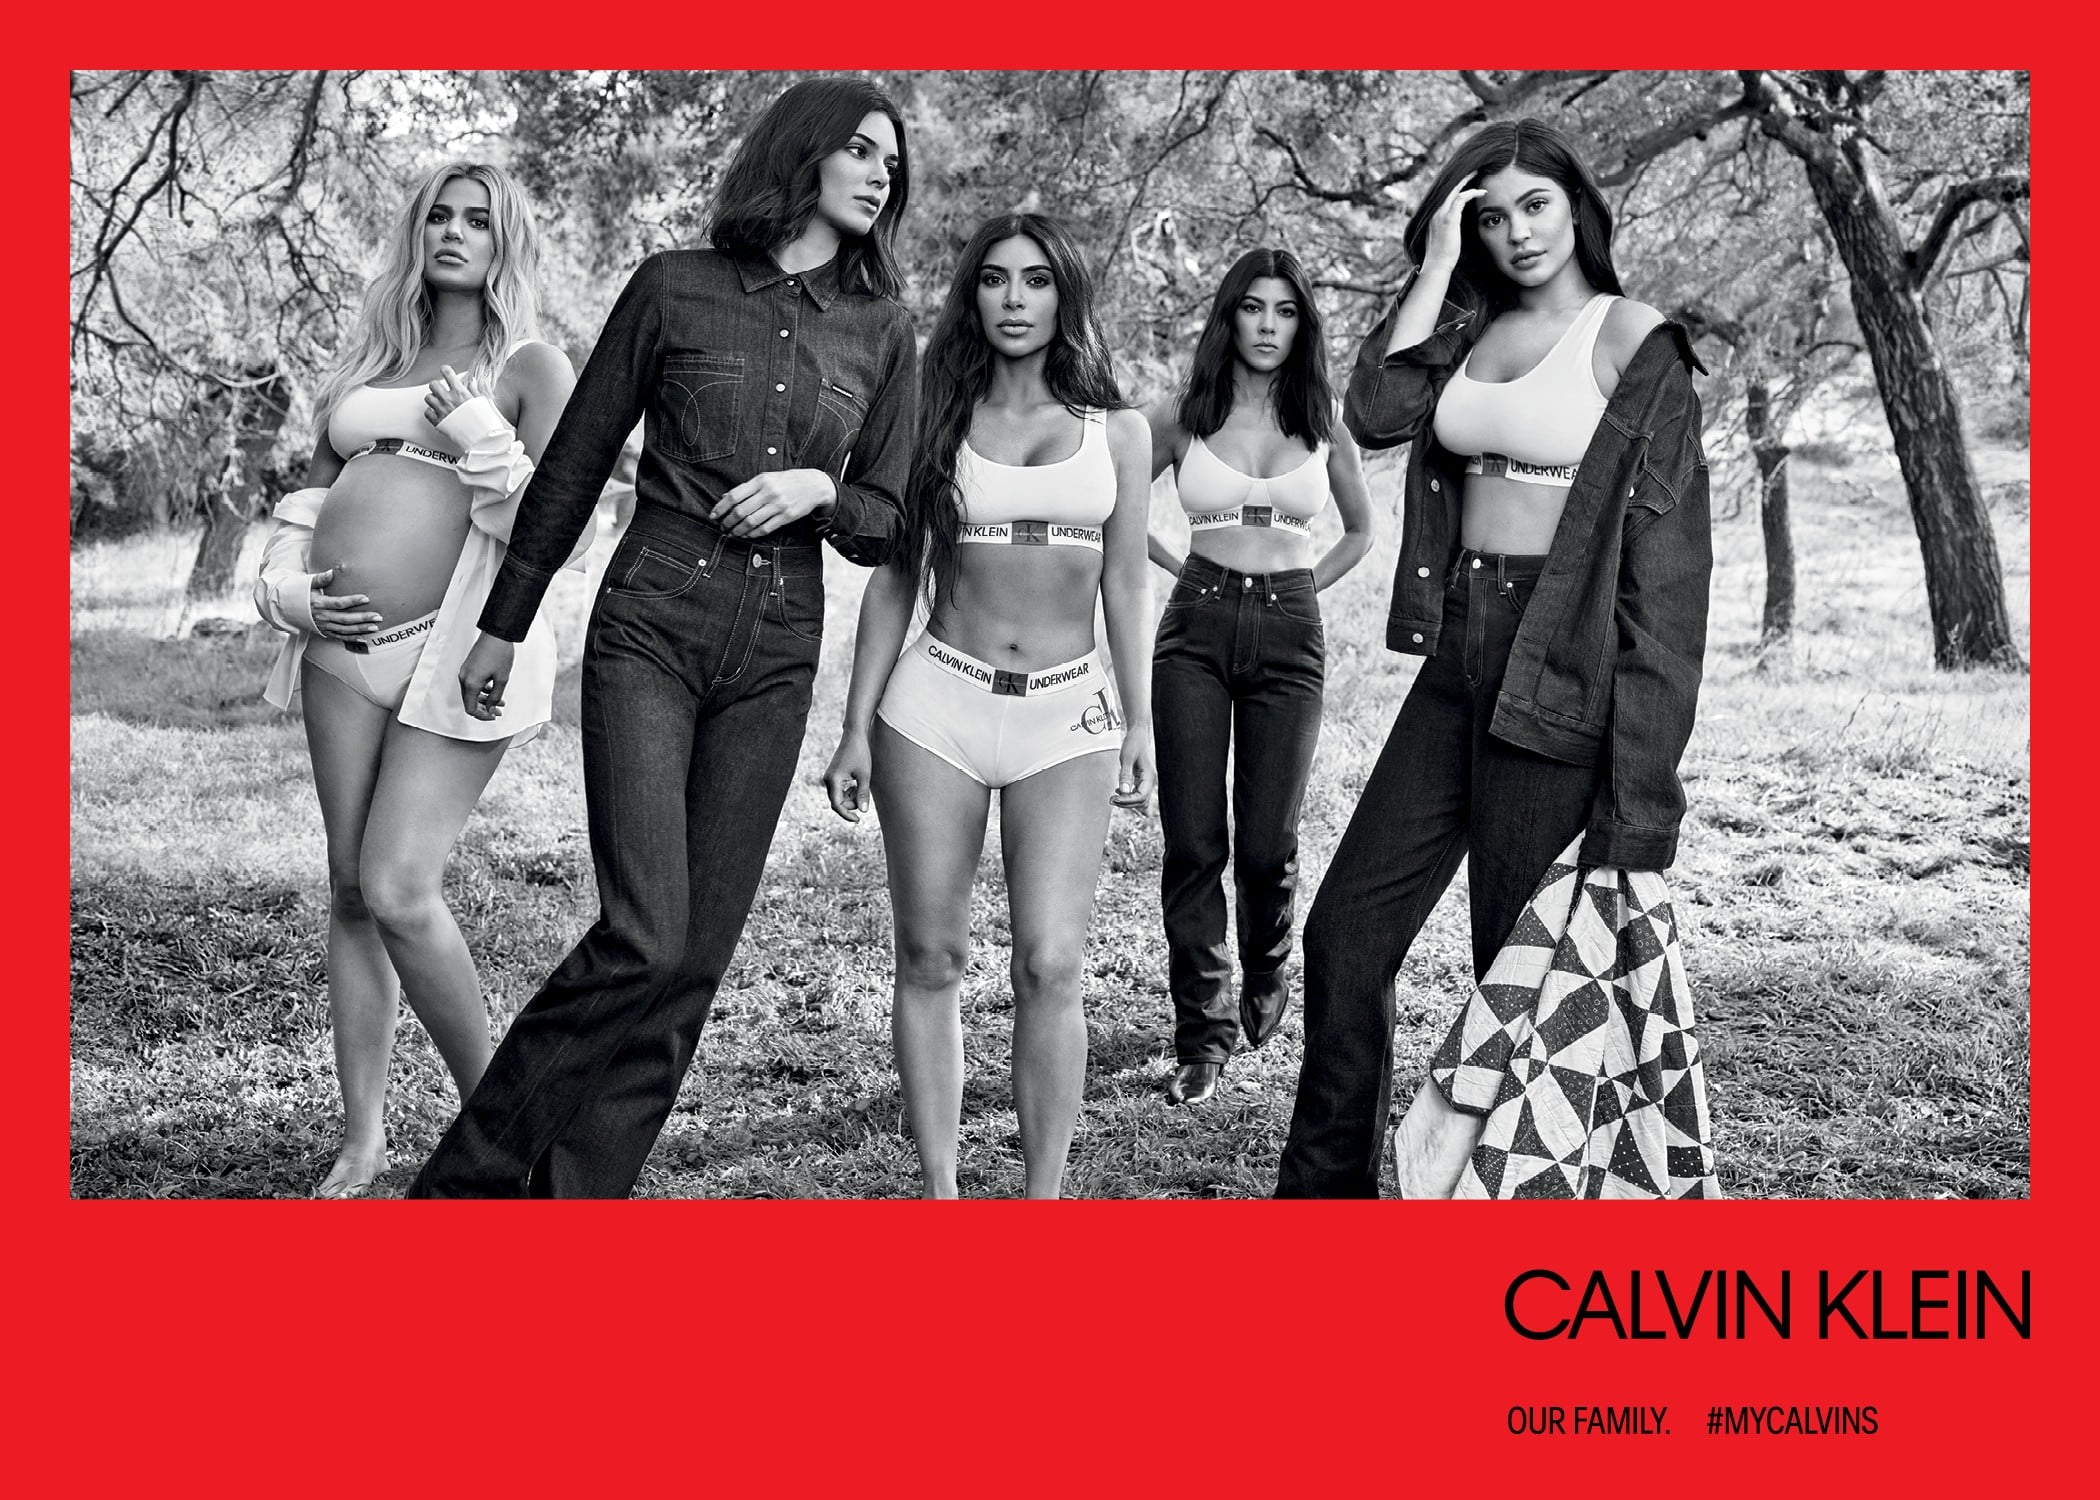 Kardashians' Calvin Klein Campaign Fall 2018